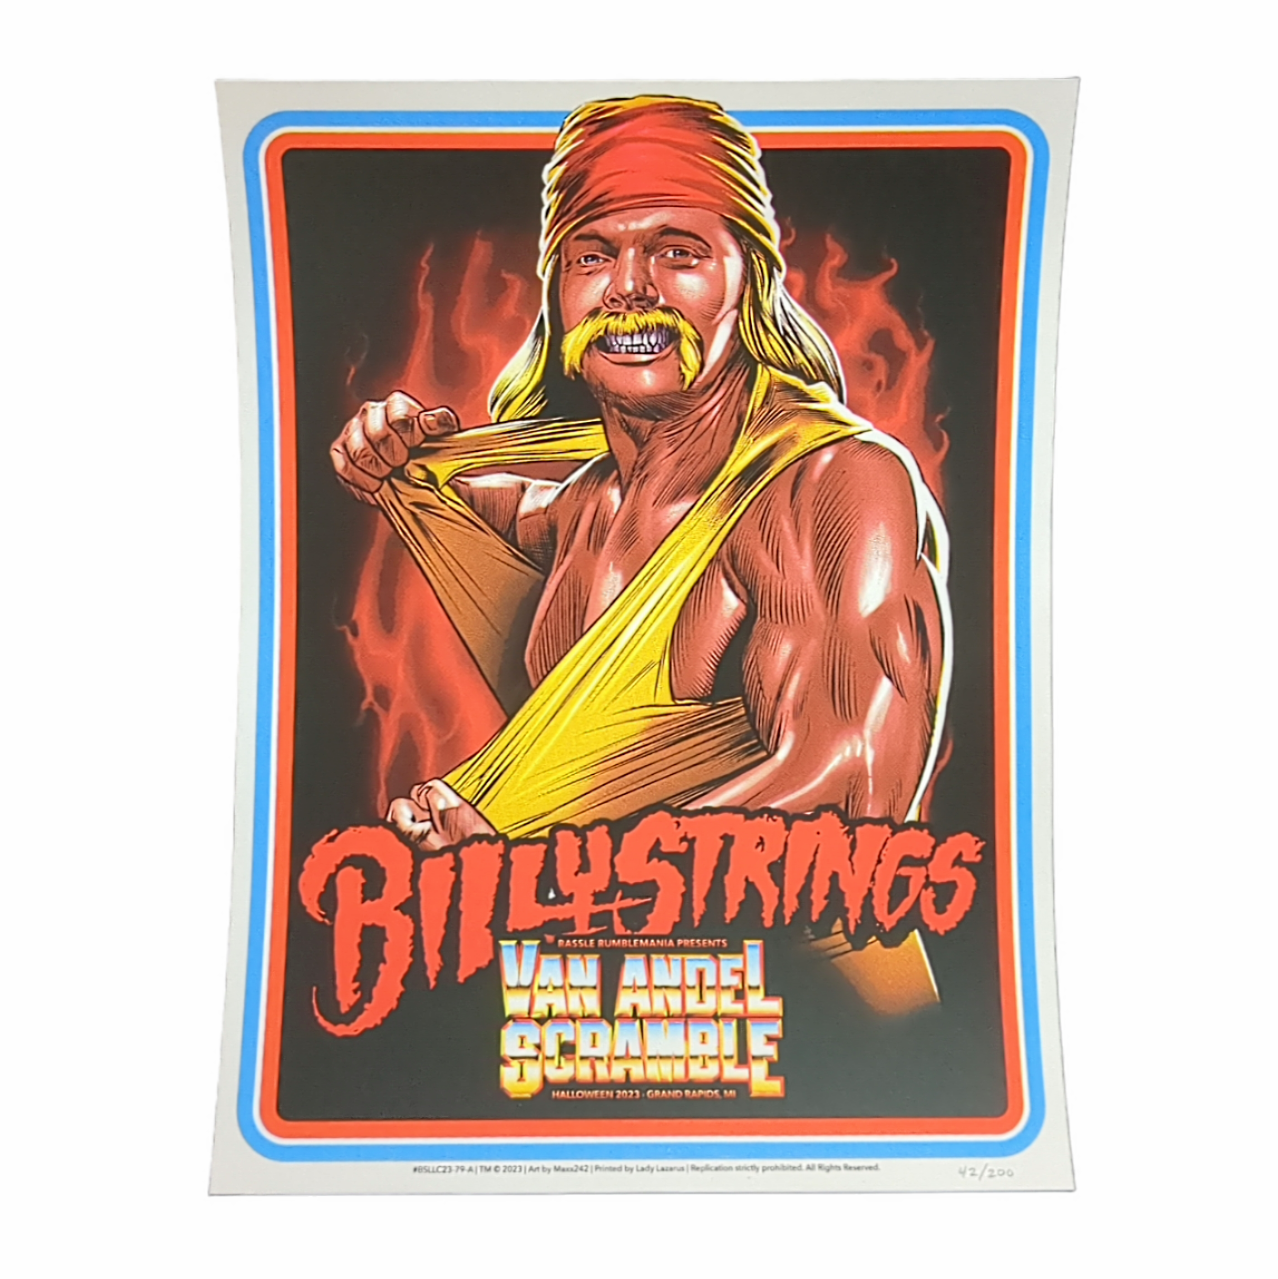 Maxxer Billy Strings Van Andel Scramble Grand Rapids, Michigan 2023 Billy Strings as Hulk Hogan Character Print 9 x 12 in Edition of 200